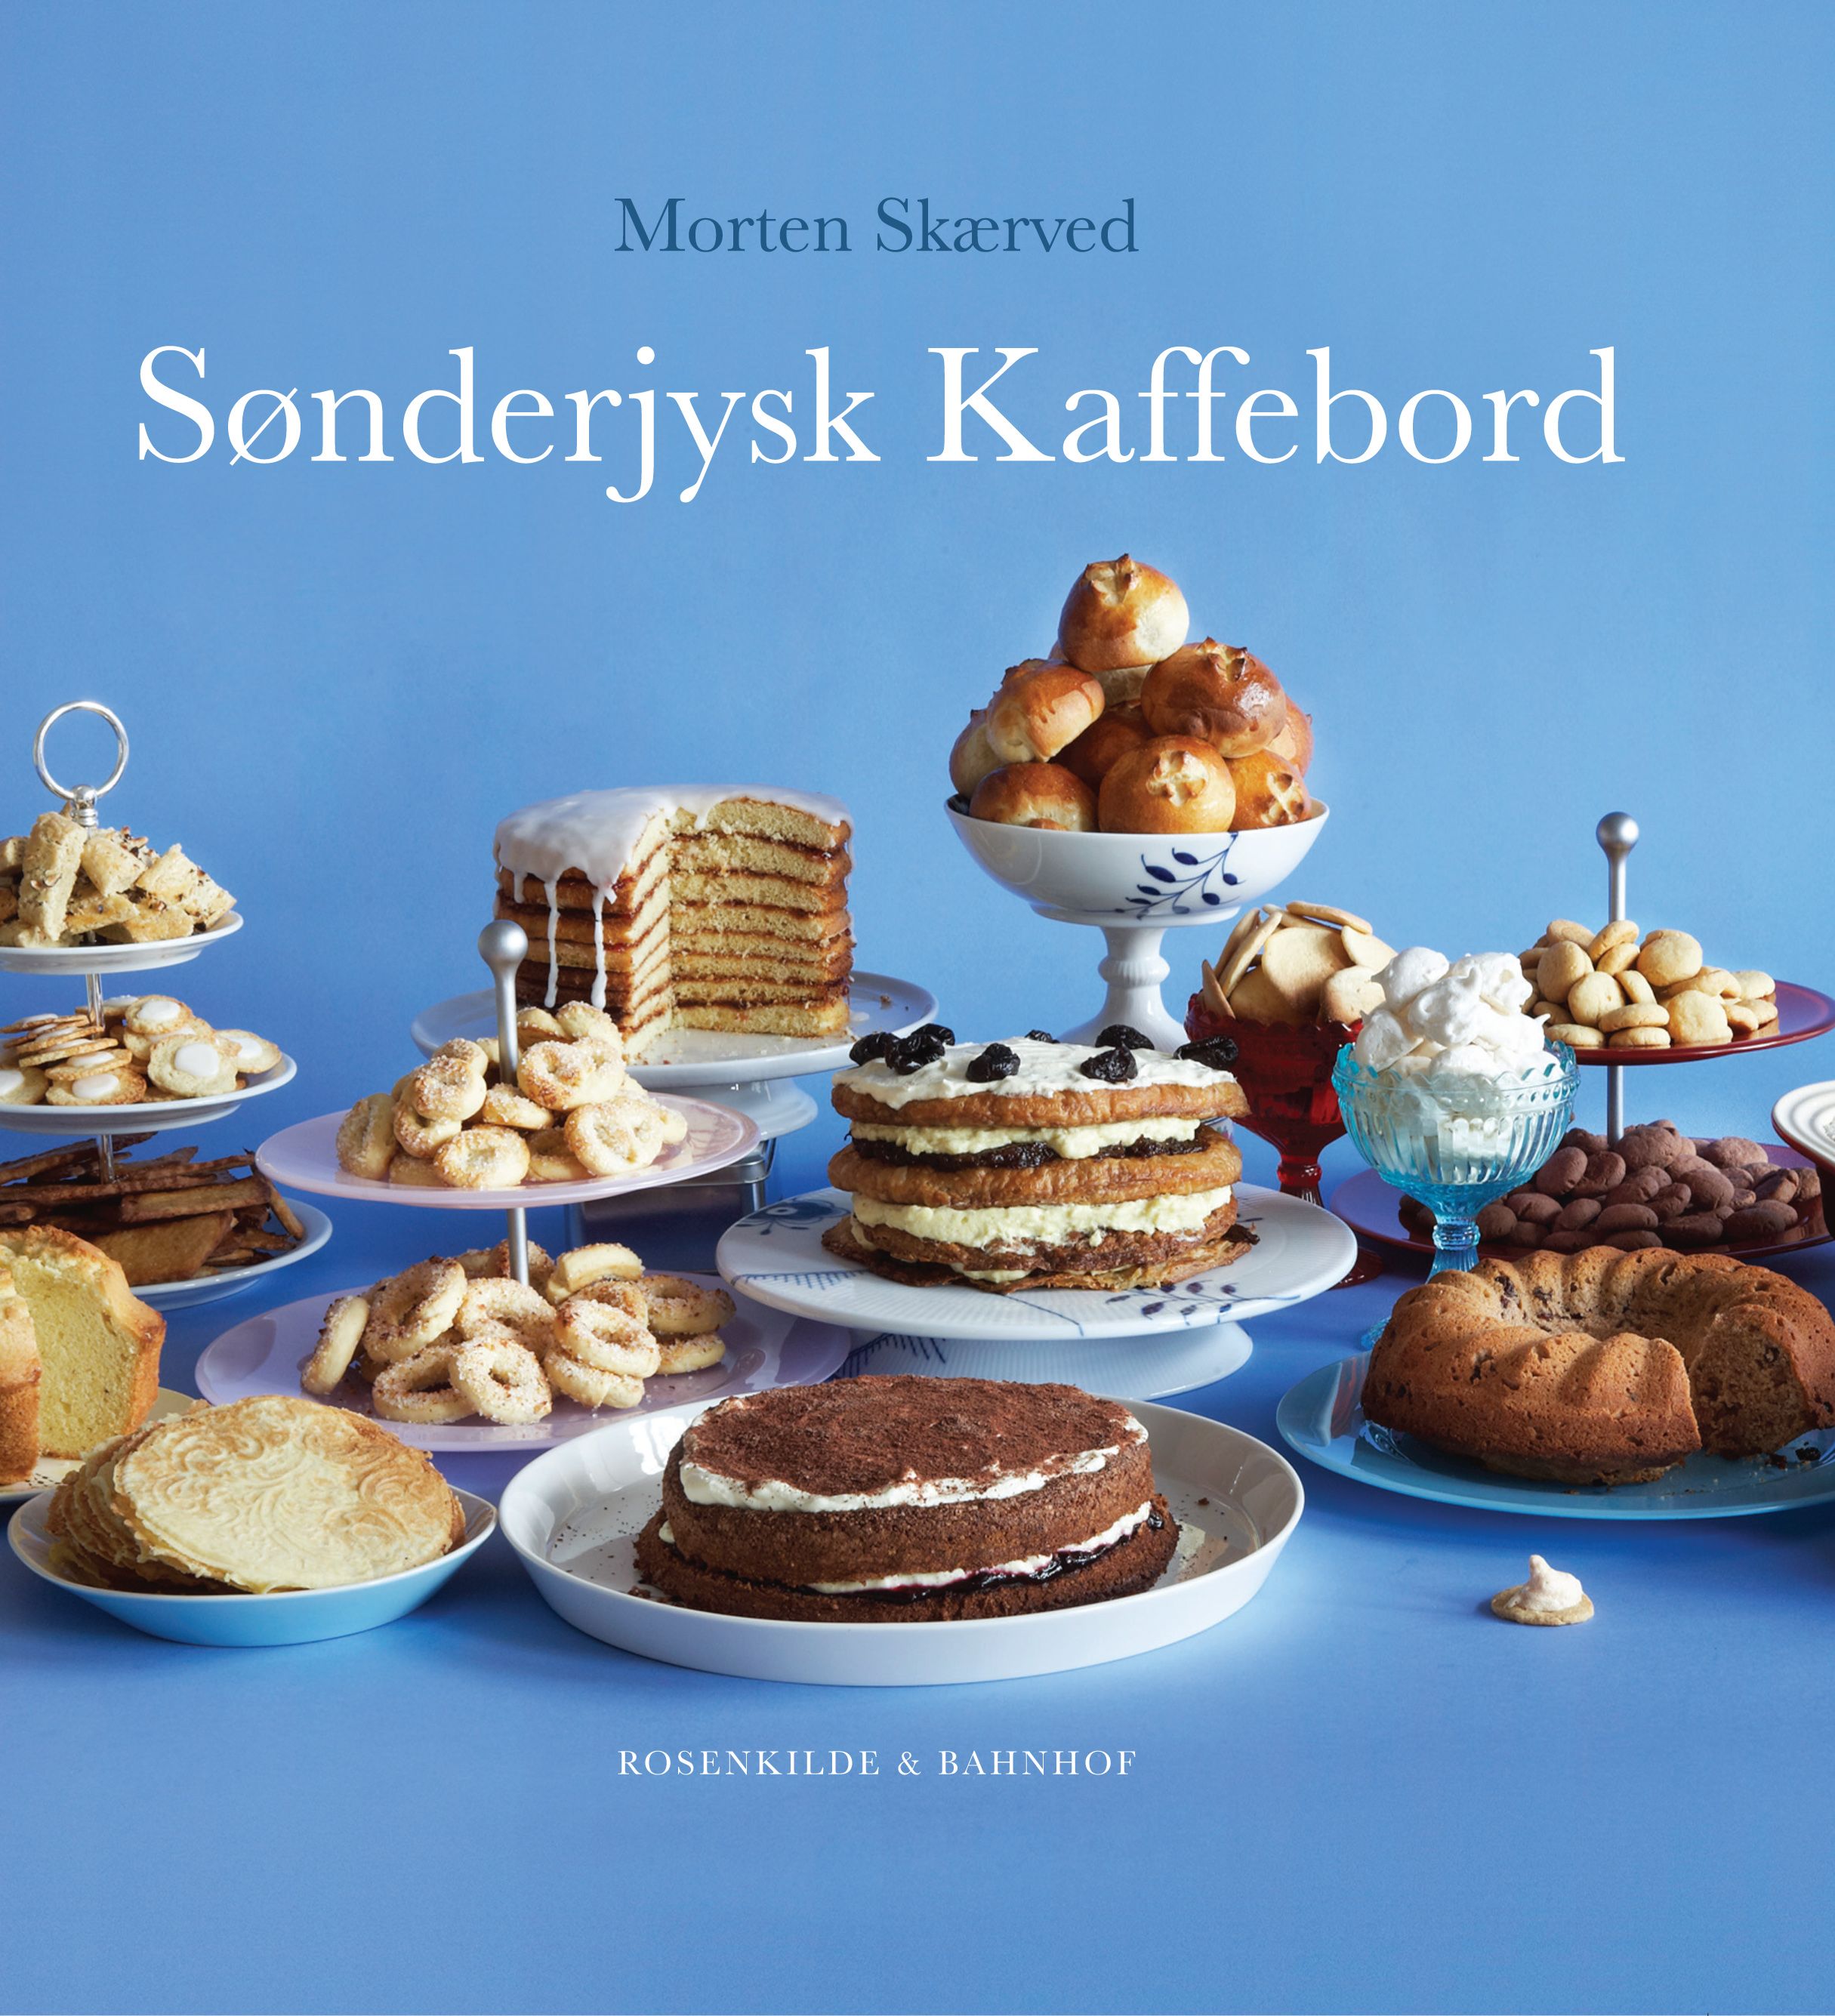 Sønderjysk kaffebord, eBook by Morten Skærved